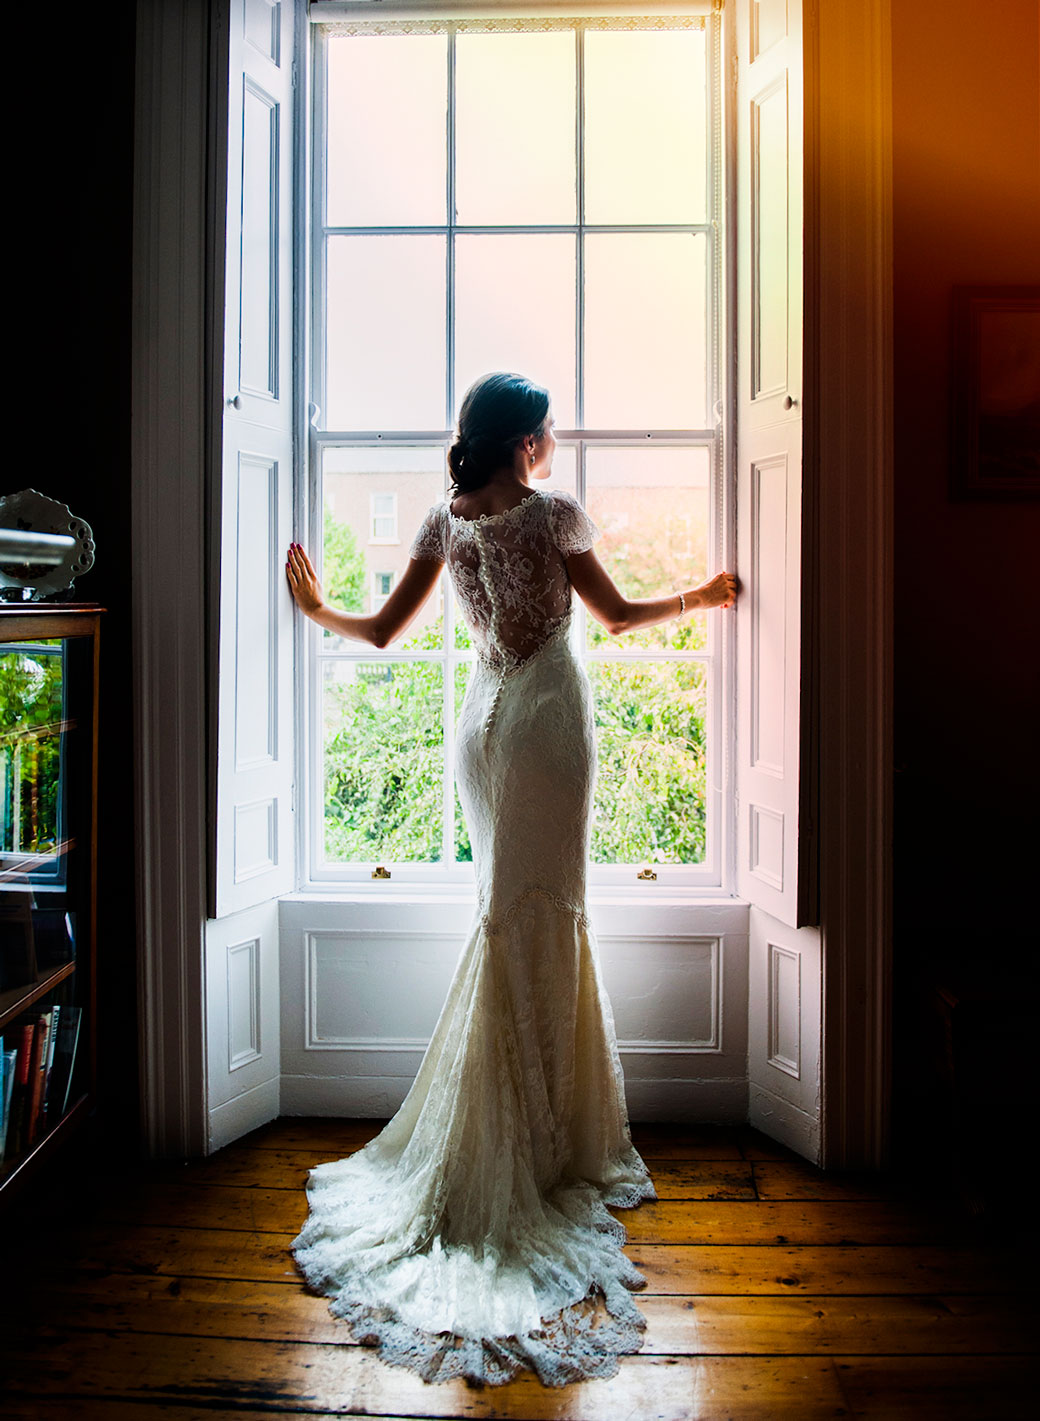 Nicola Webster Wedding Portrait Photography Dublin Ireland.